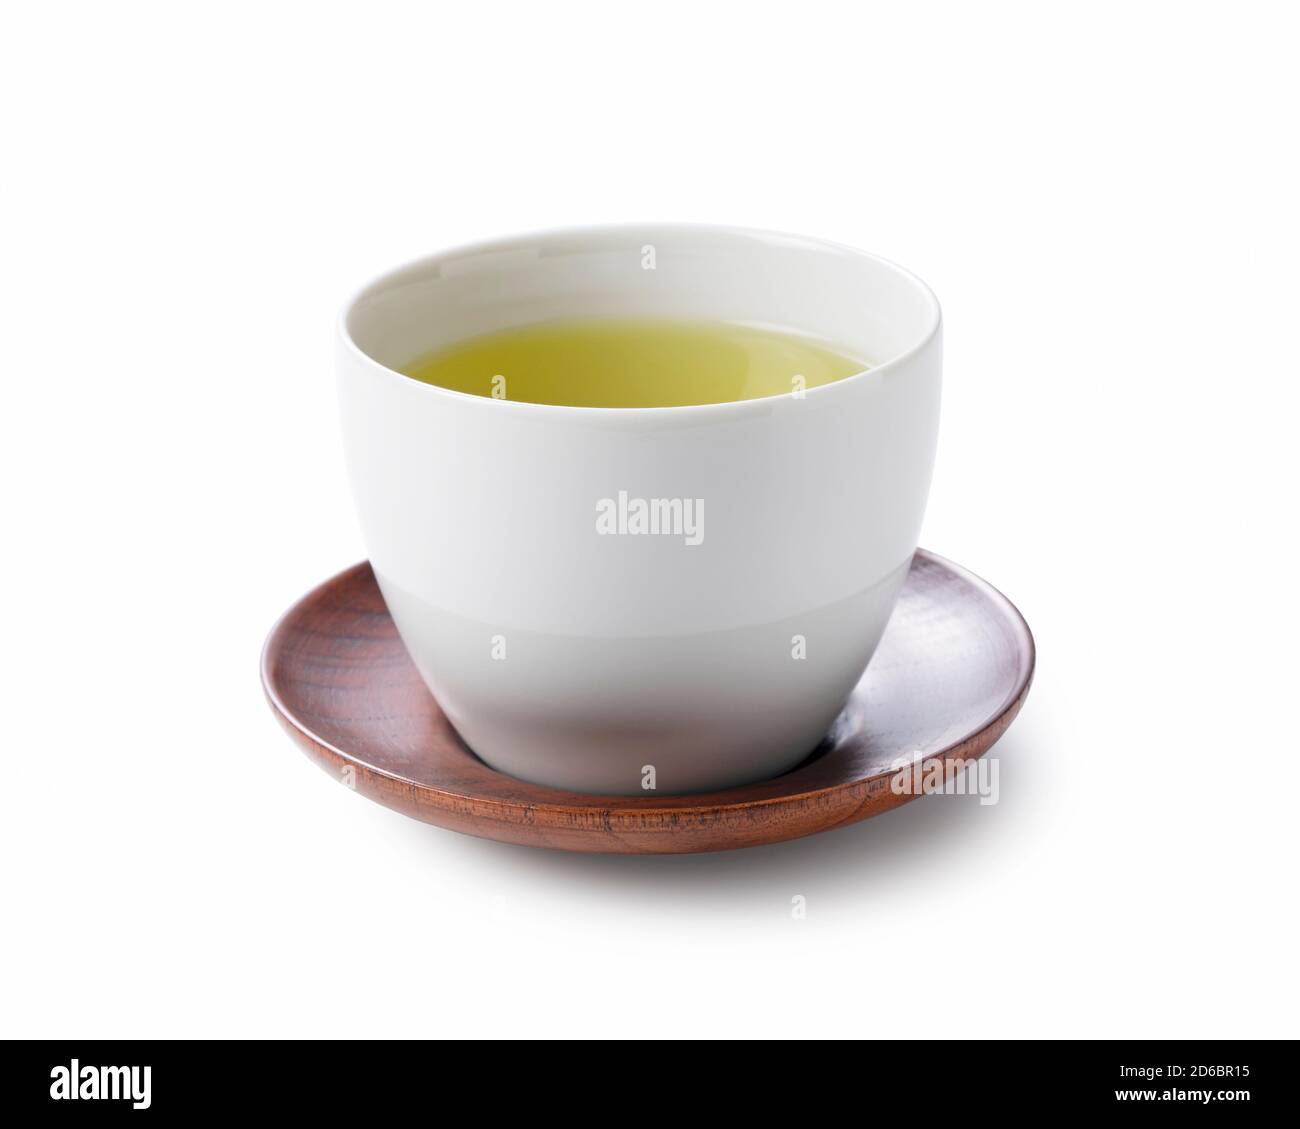 https://c8.alamy.com/comp/2D6BR15/green-tea-on-a-white-background-image-of-japanese-green-tea-2D6BR15.jpg